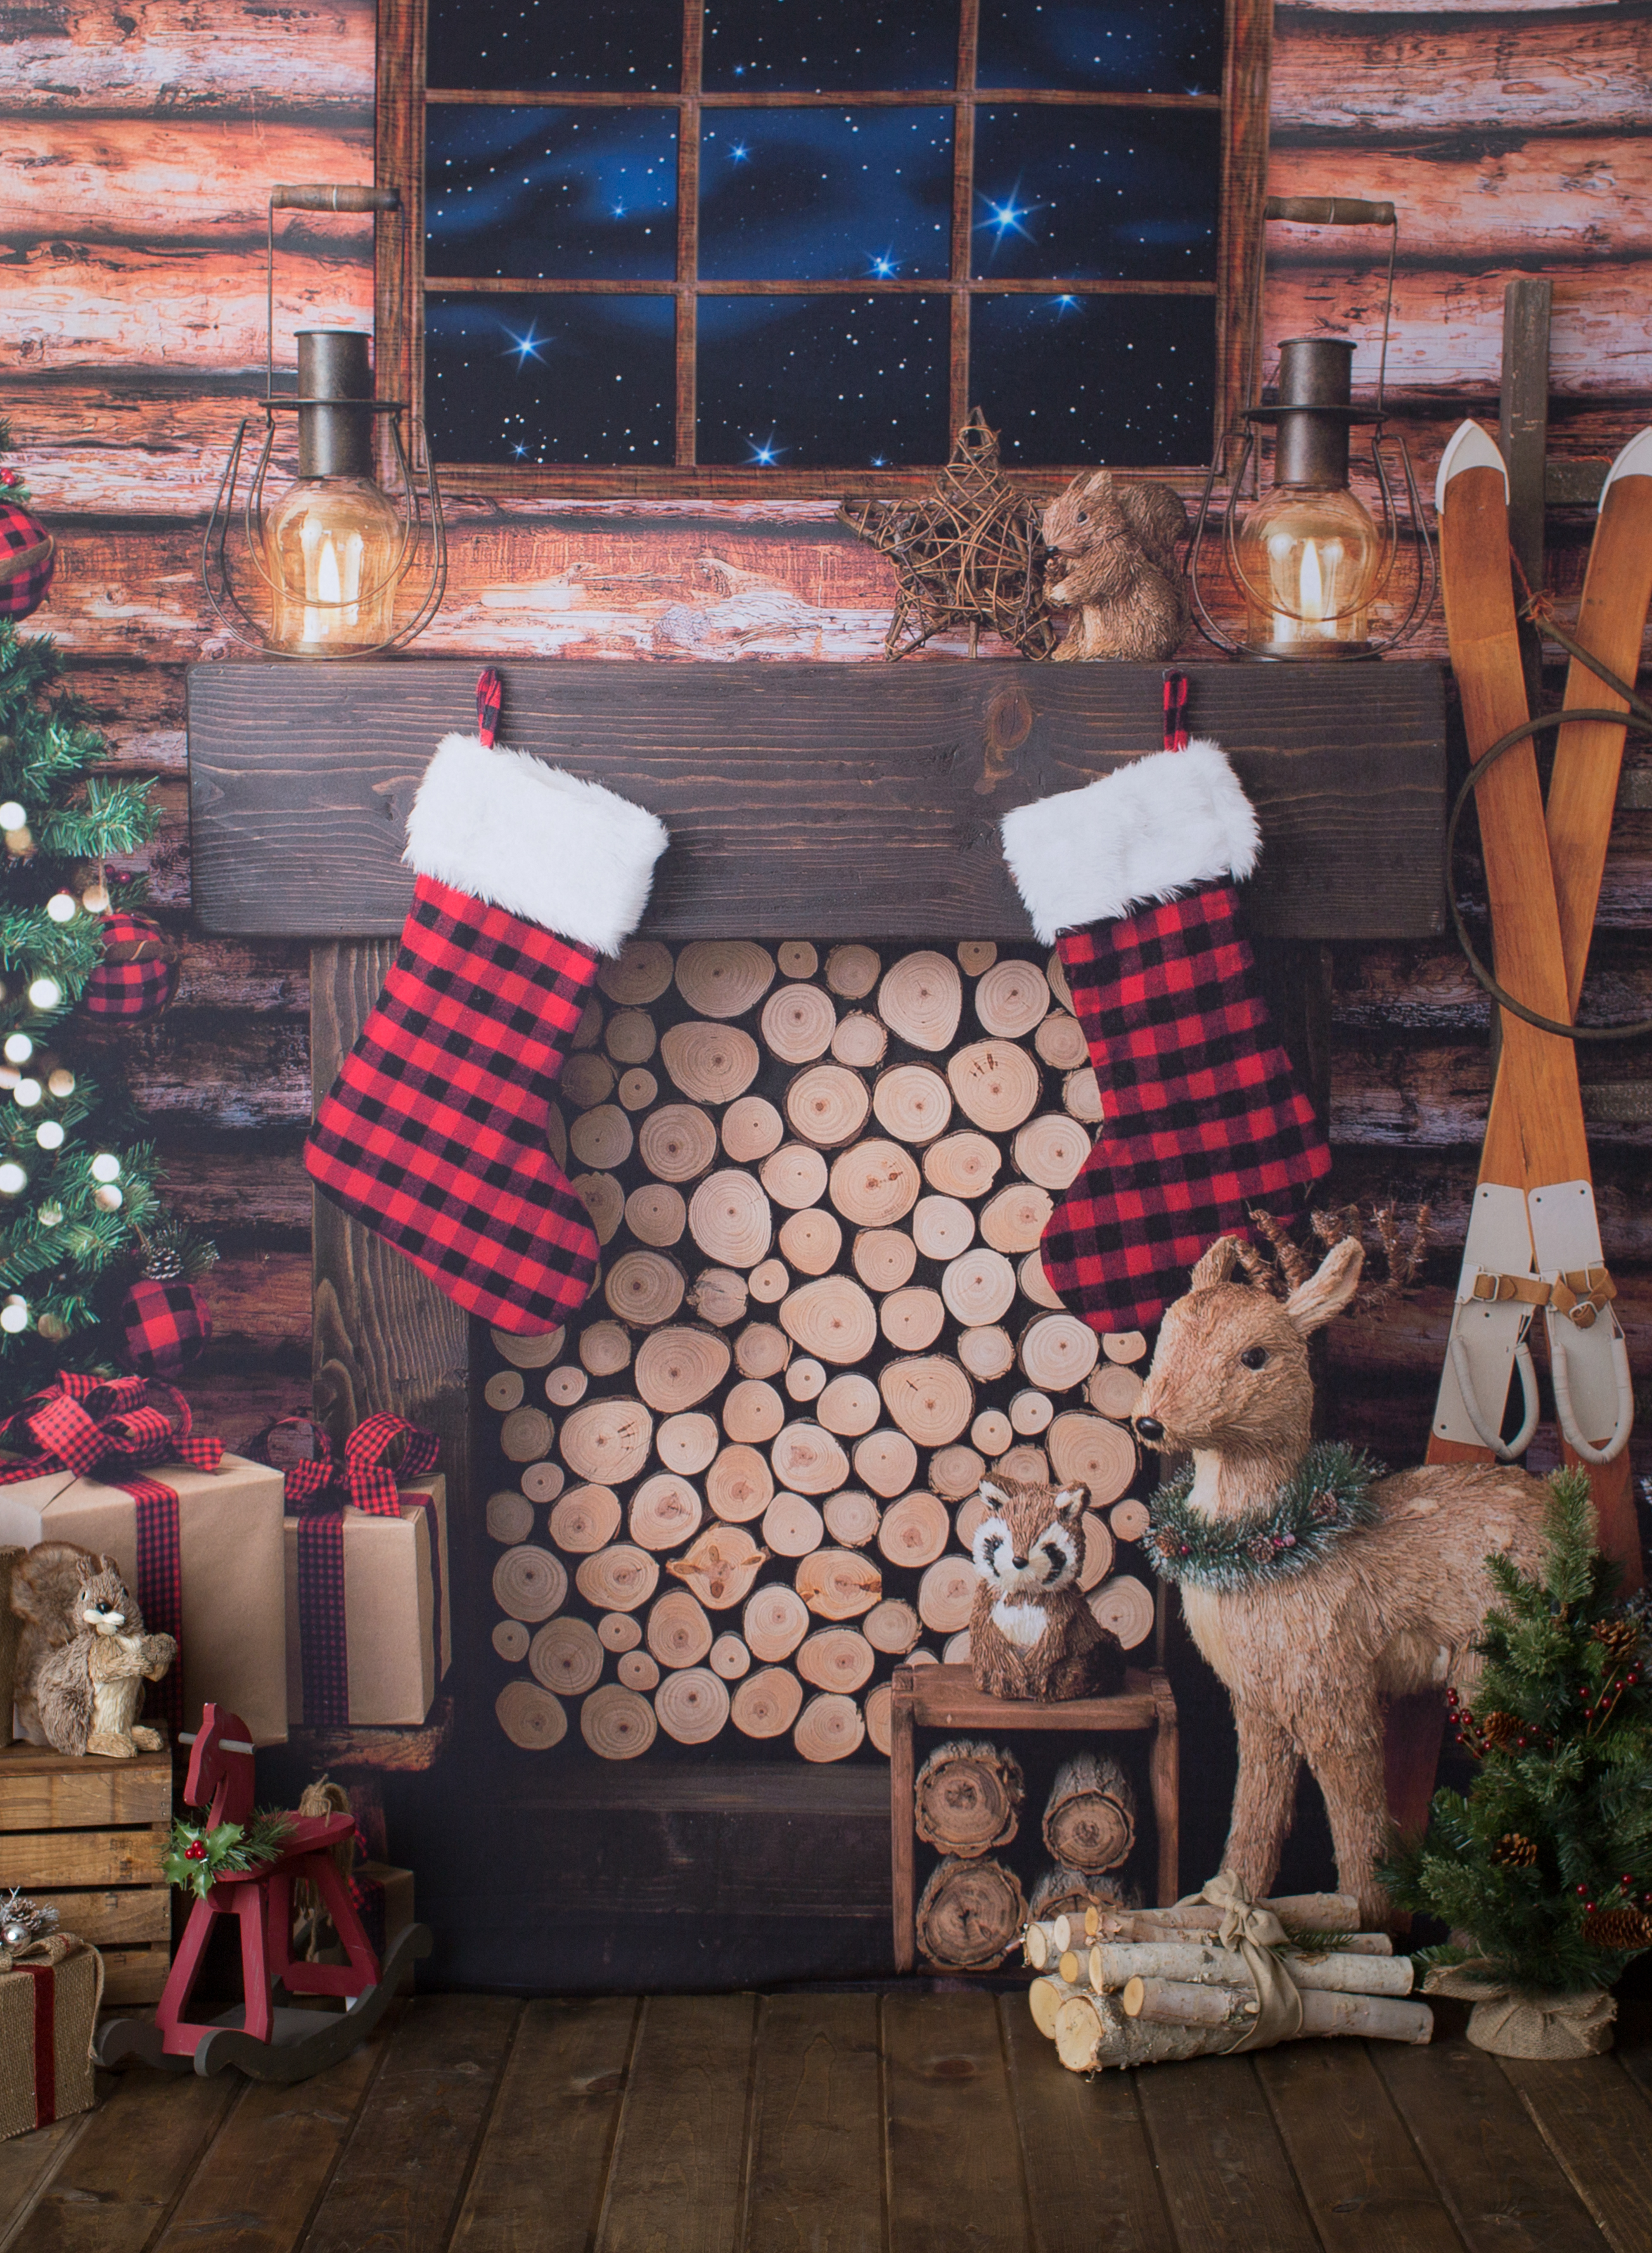 Evergreen Holiday Mini Session, Christmas Minis, Holiday Minis, Rustic Christmas Cabin, Carrie Edwards Photography, Evergreen Colorado Photographer